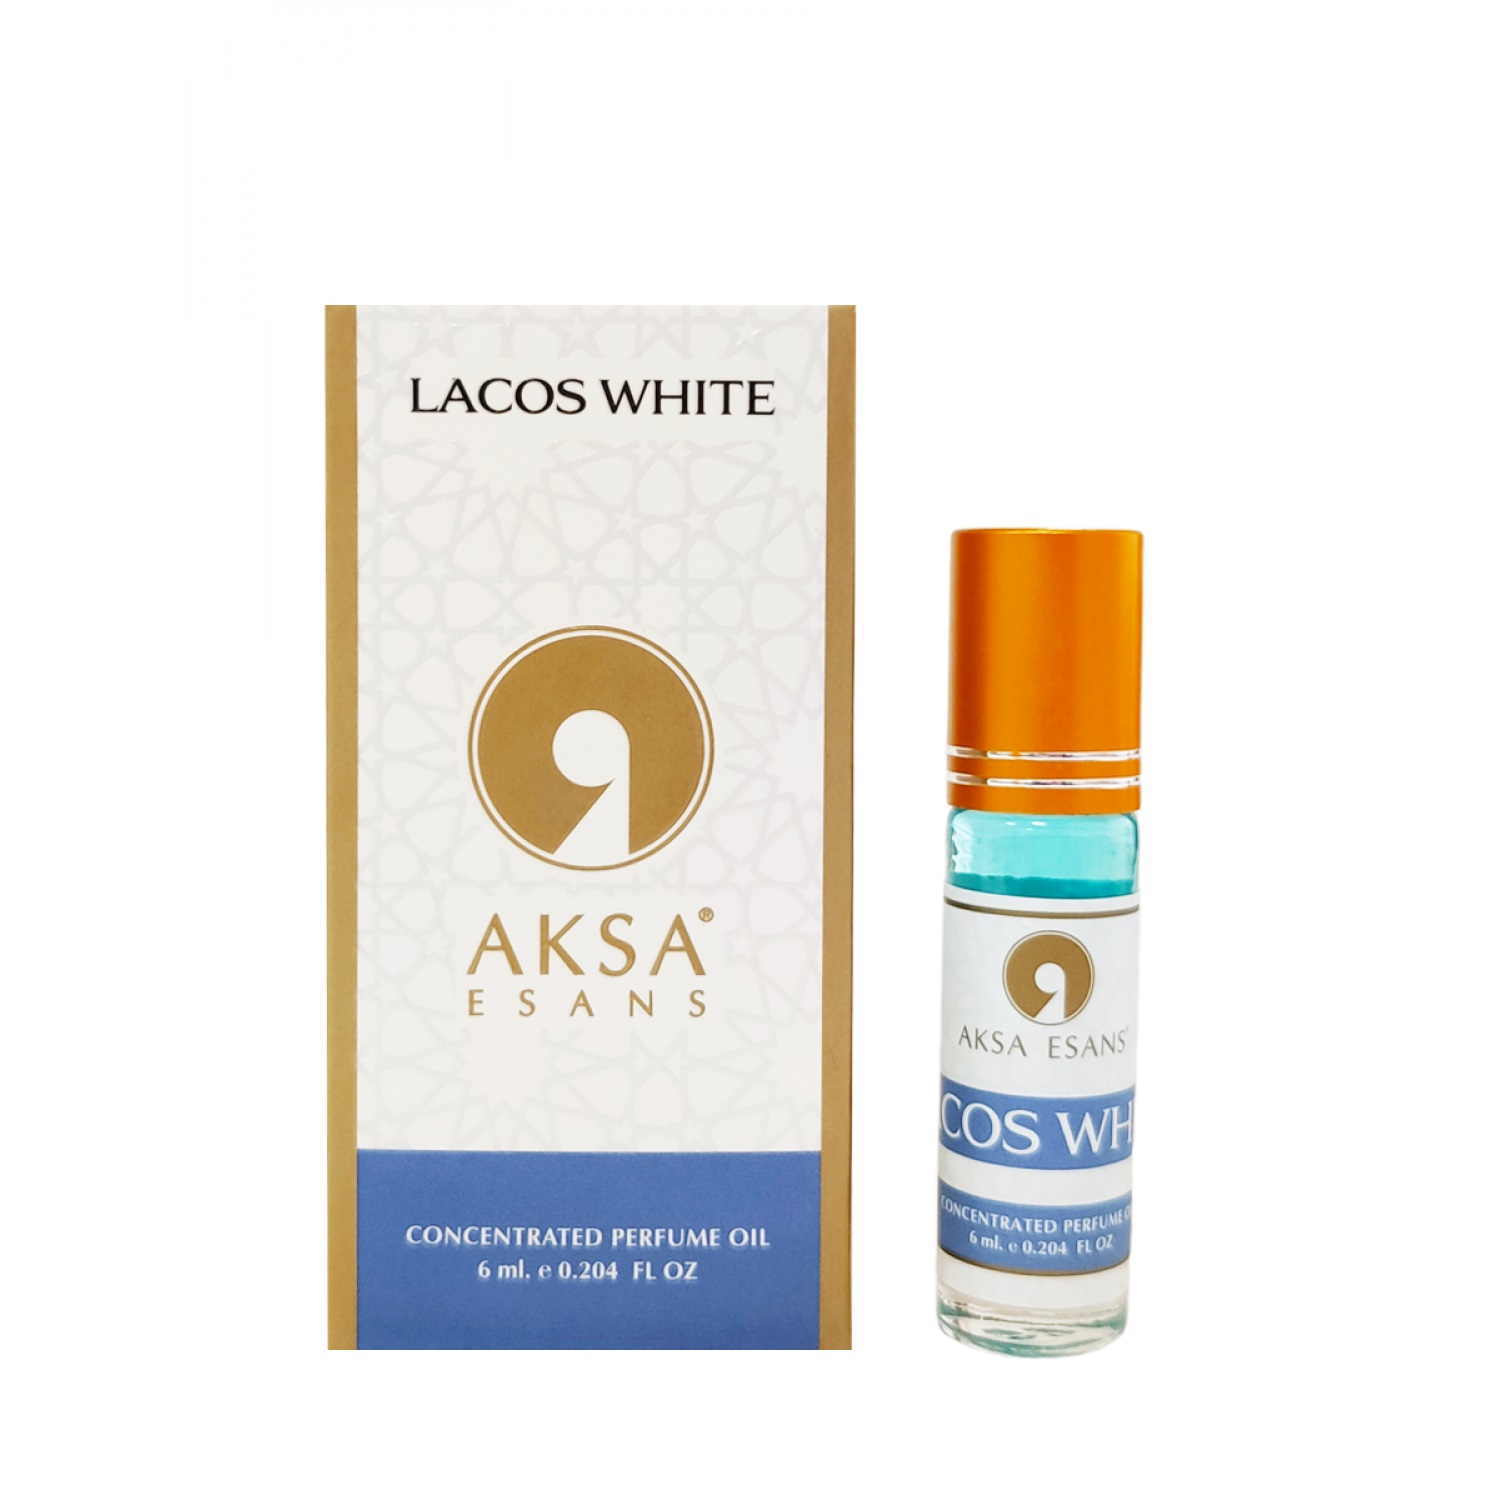 LAСOS WHITE Concentrated Perfume Oil, Aksa Esans (ЛАКОС УАЙТ турецкие роликовые масляные духи, Акса Эсанс), 6 мл.